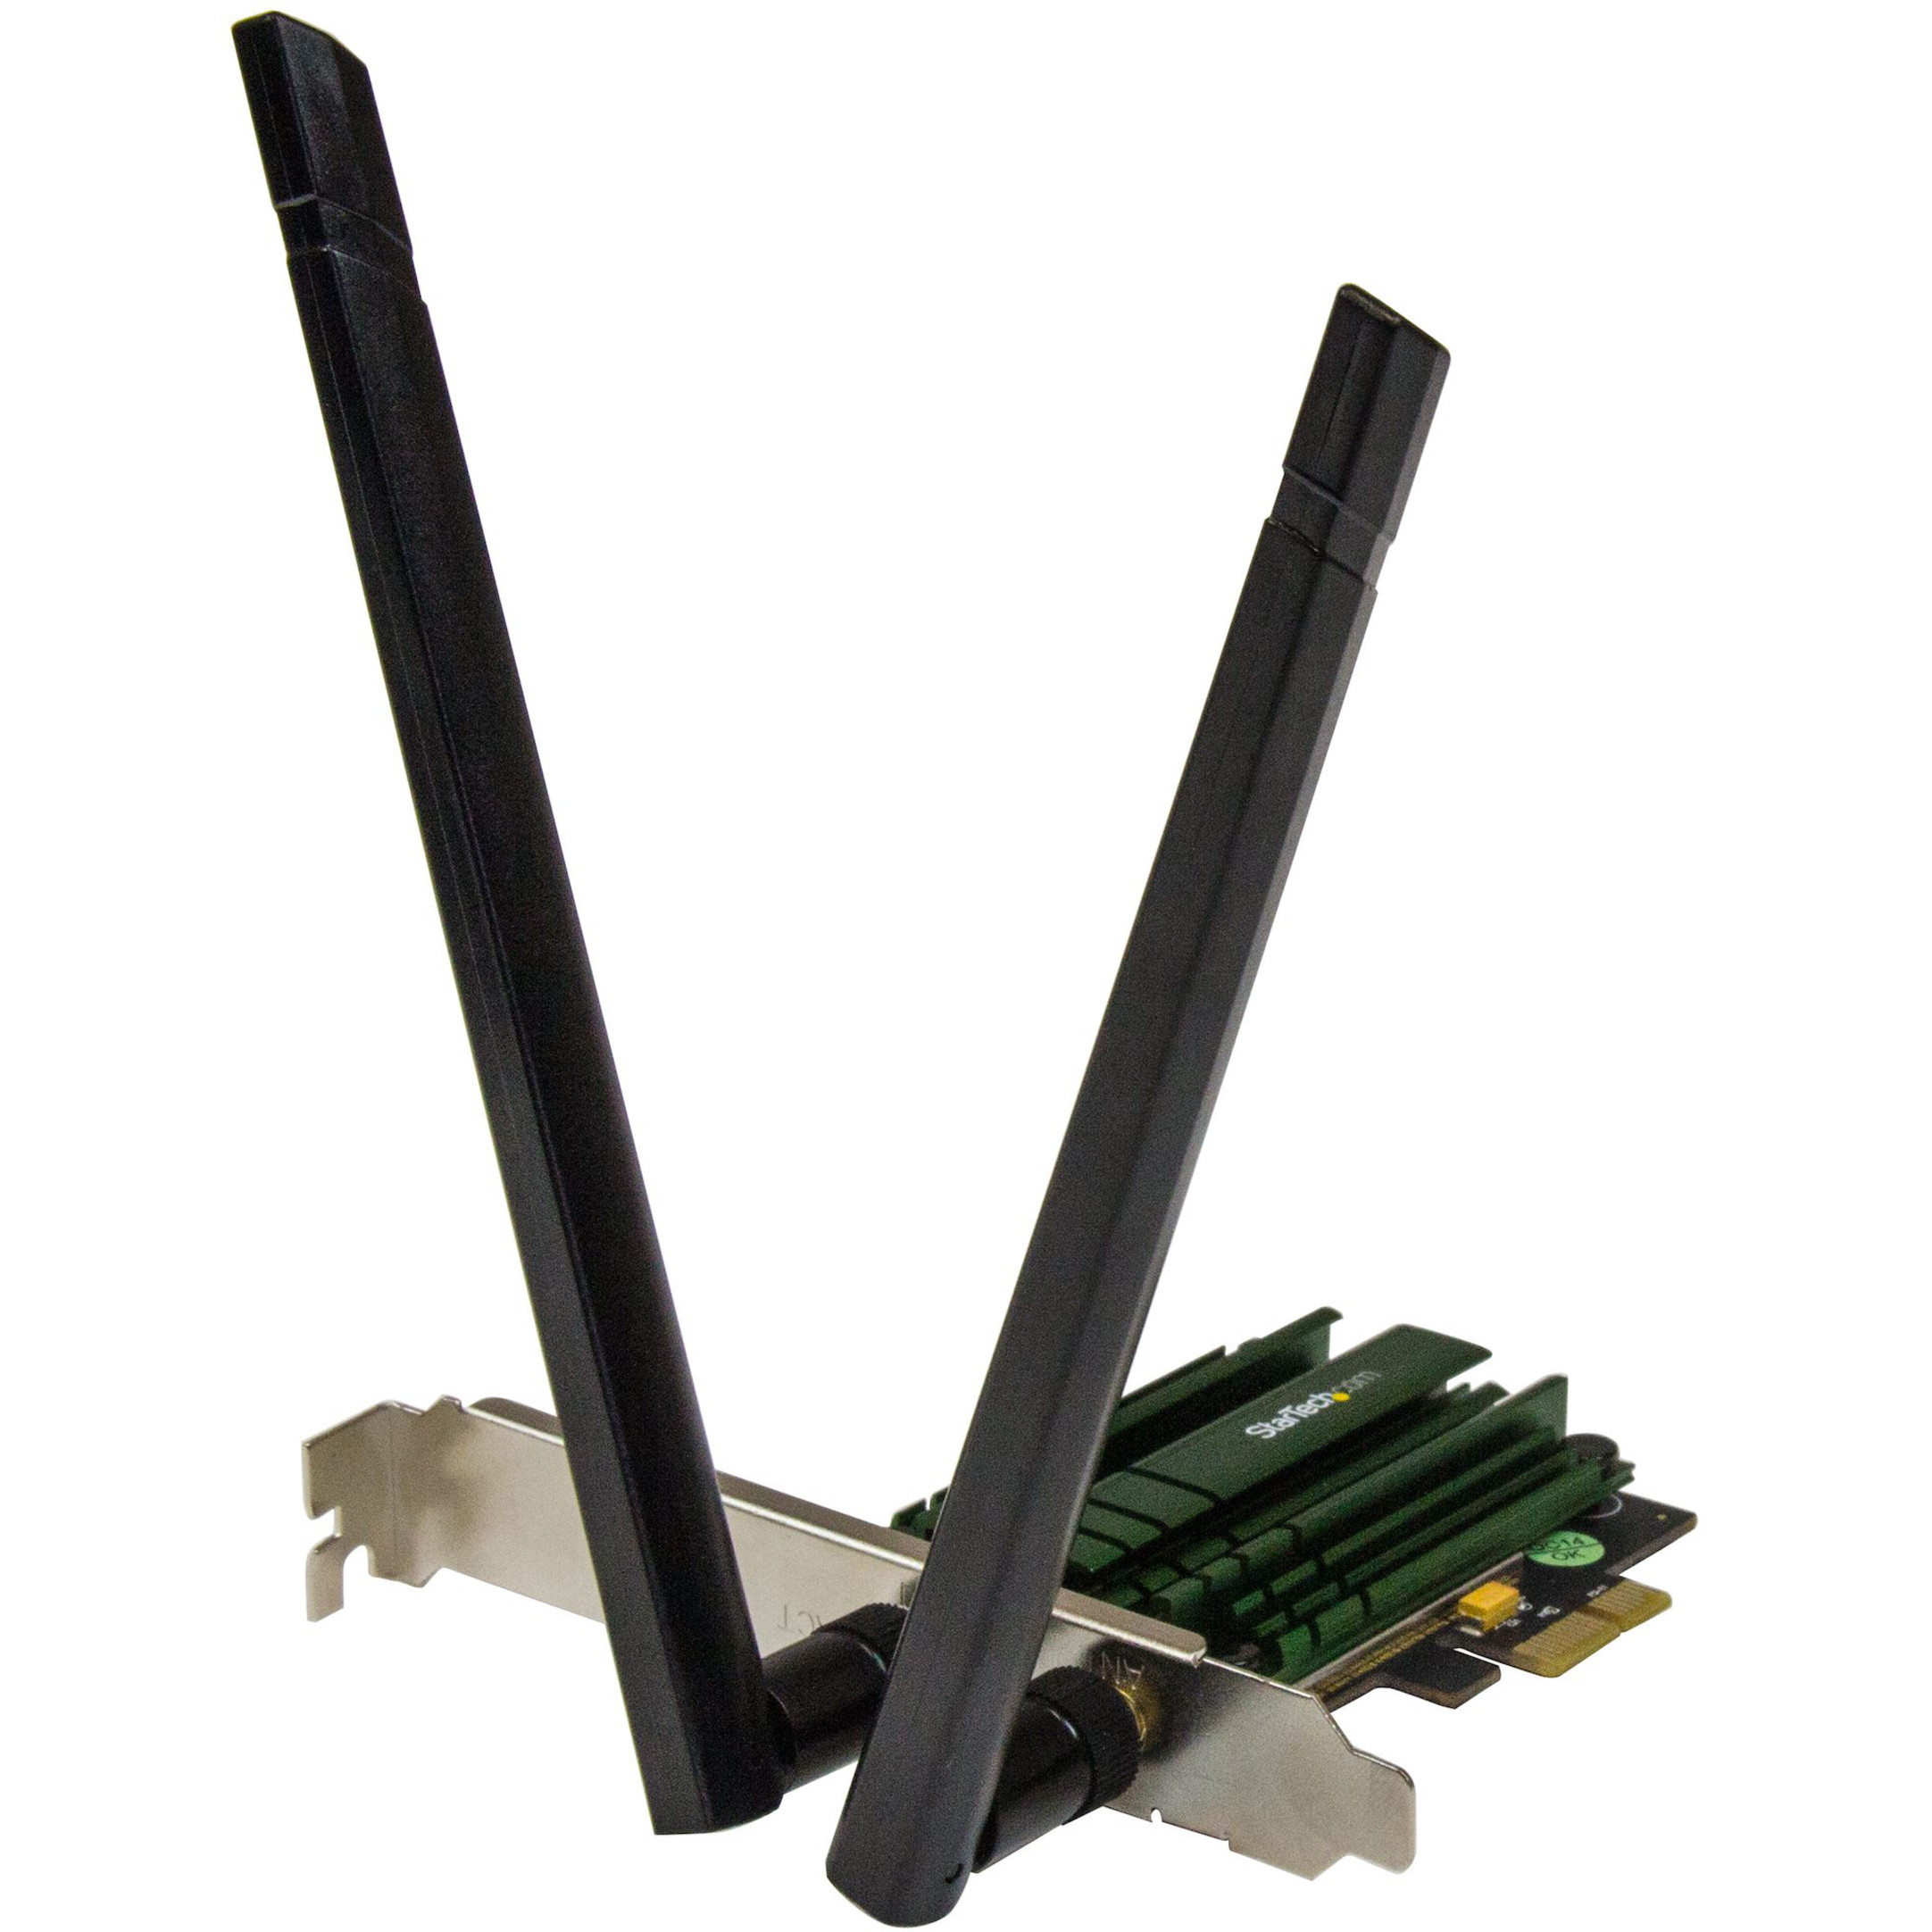 Startech .com PCI Express AC1200 Dual Band Wireless-AC Network AdapterPCIe 802.11ac WiFi CardAdd high speed 802.11ac WiFi connectivity… PEX867WAC22